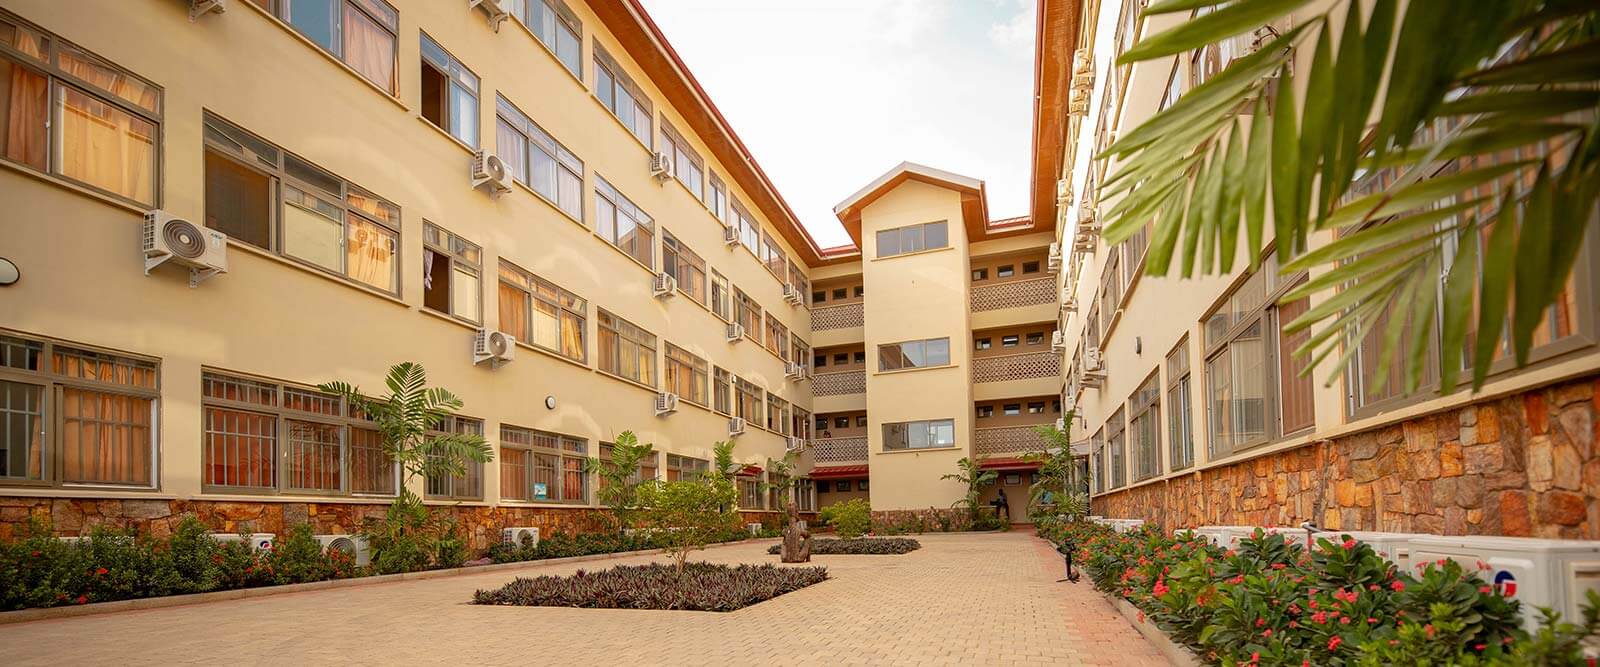 hostel housing academic city